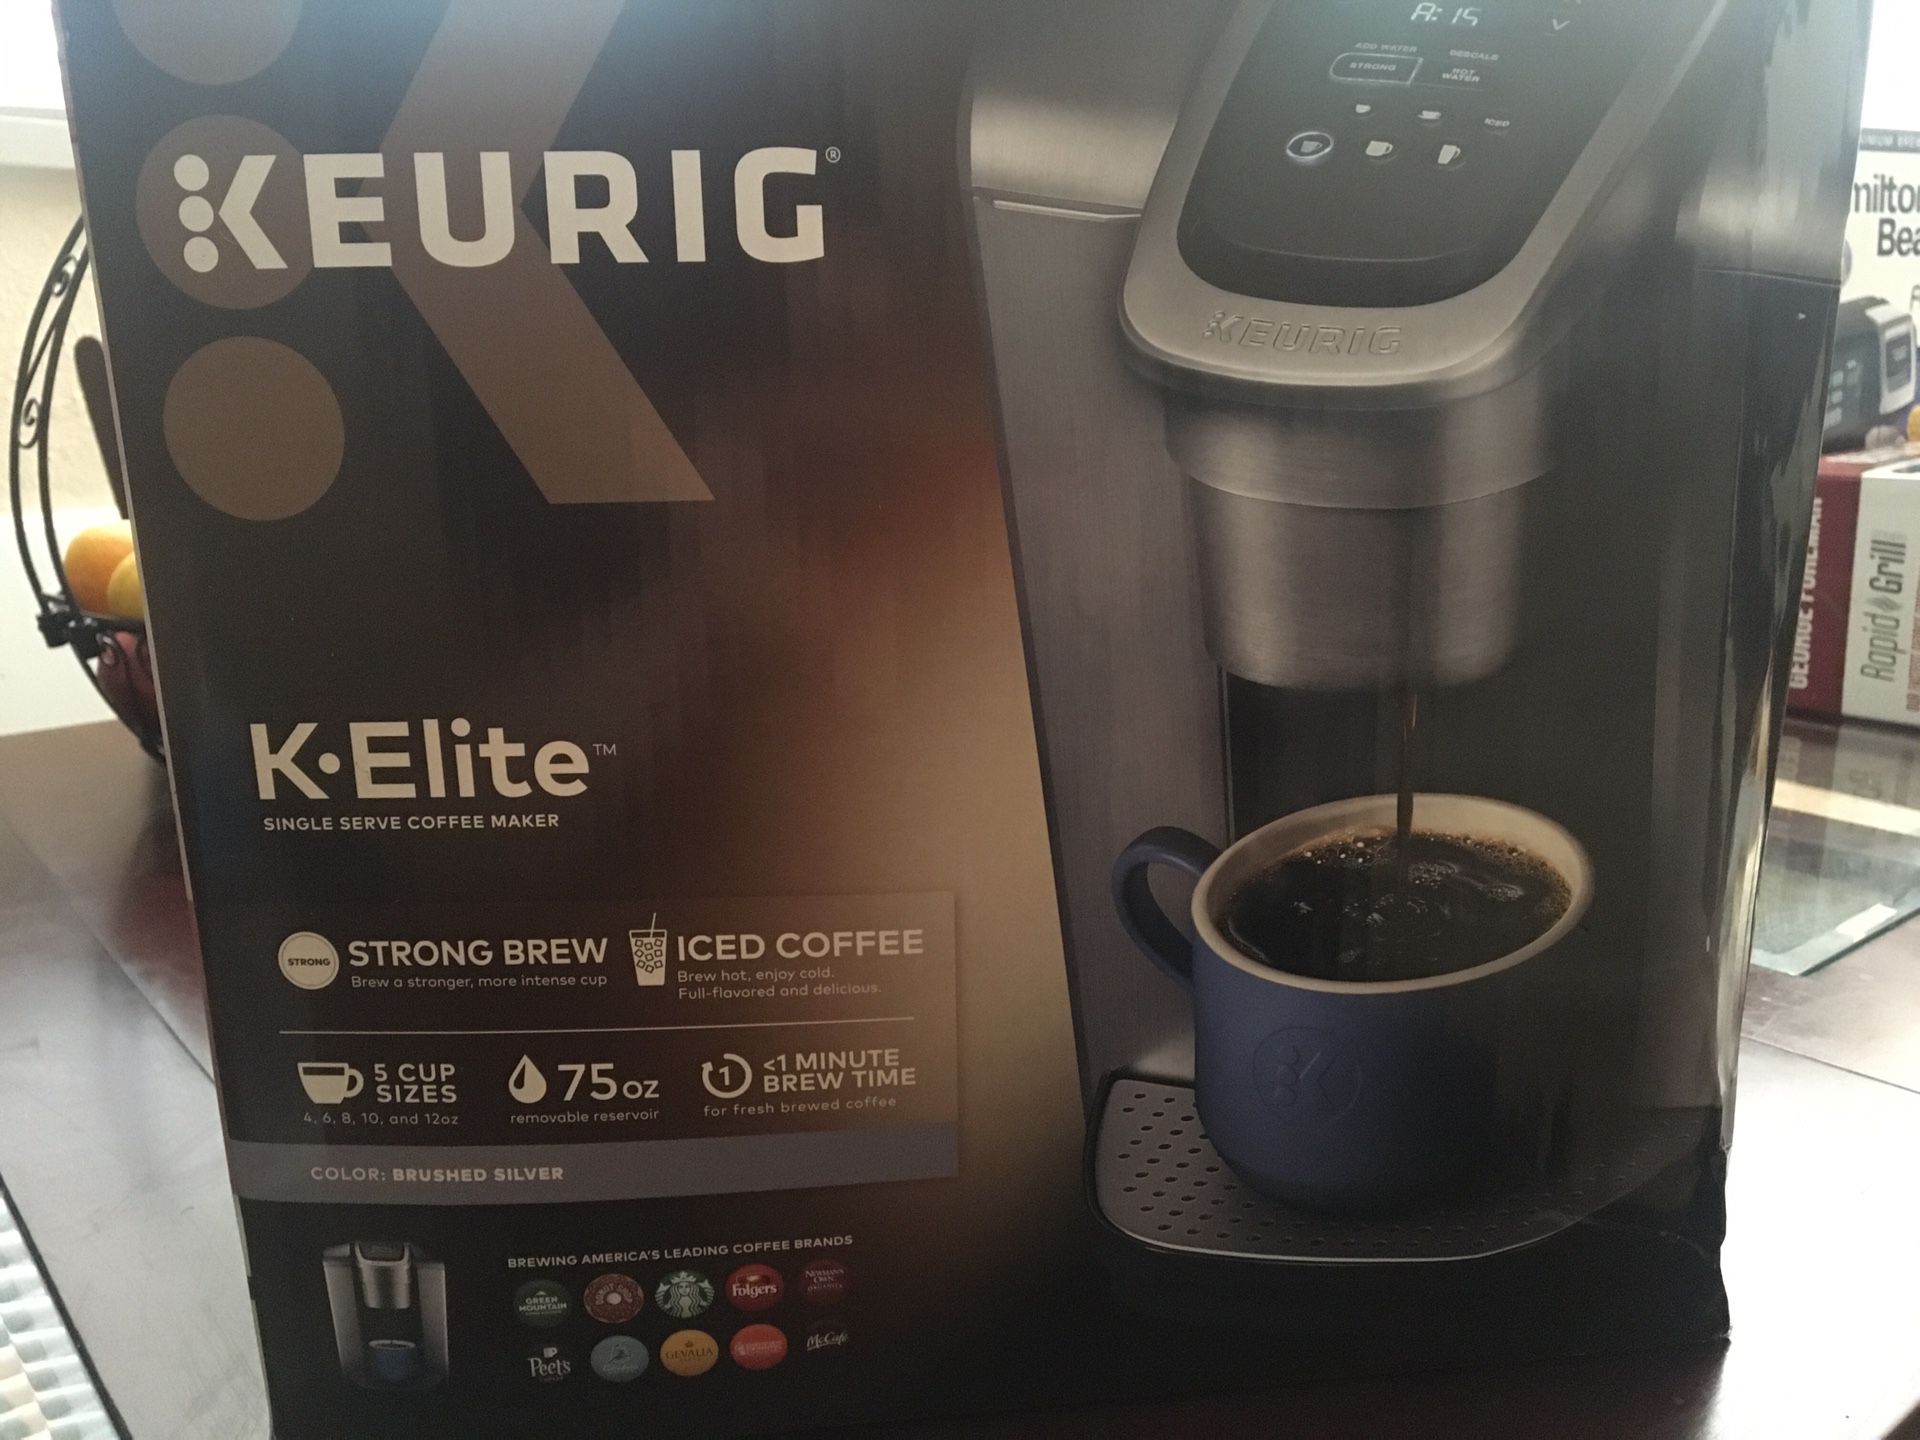 Keurig elite single serve coffee maker